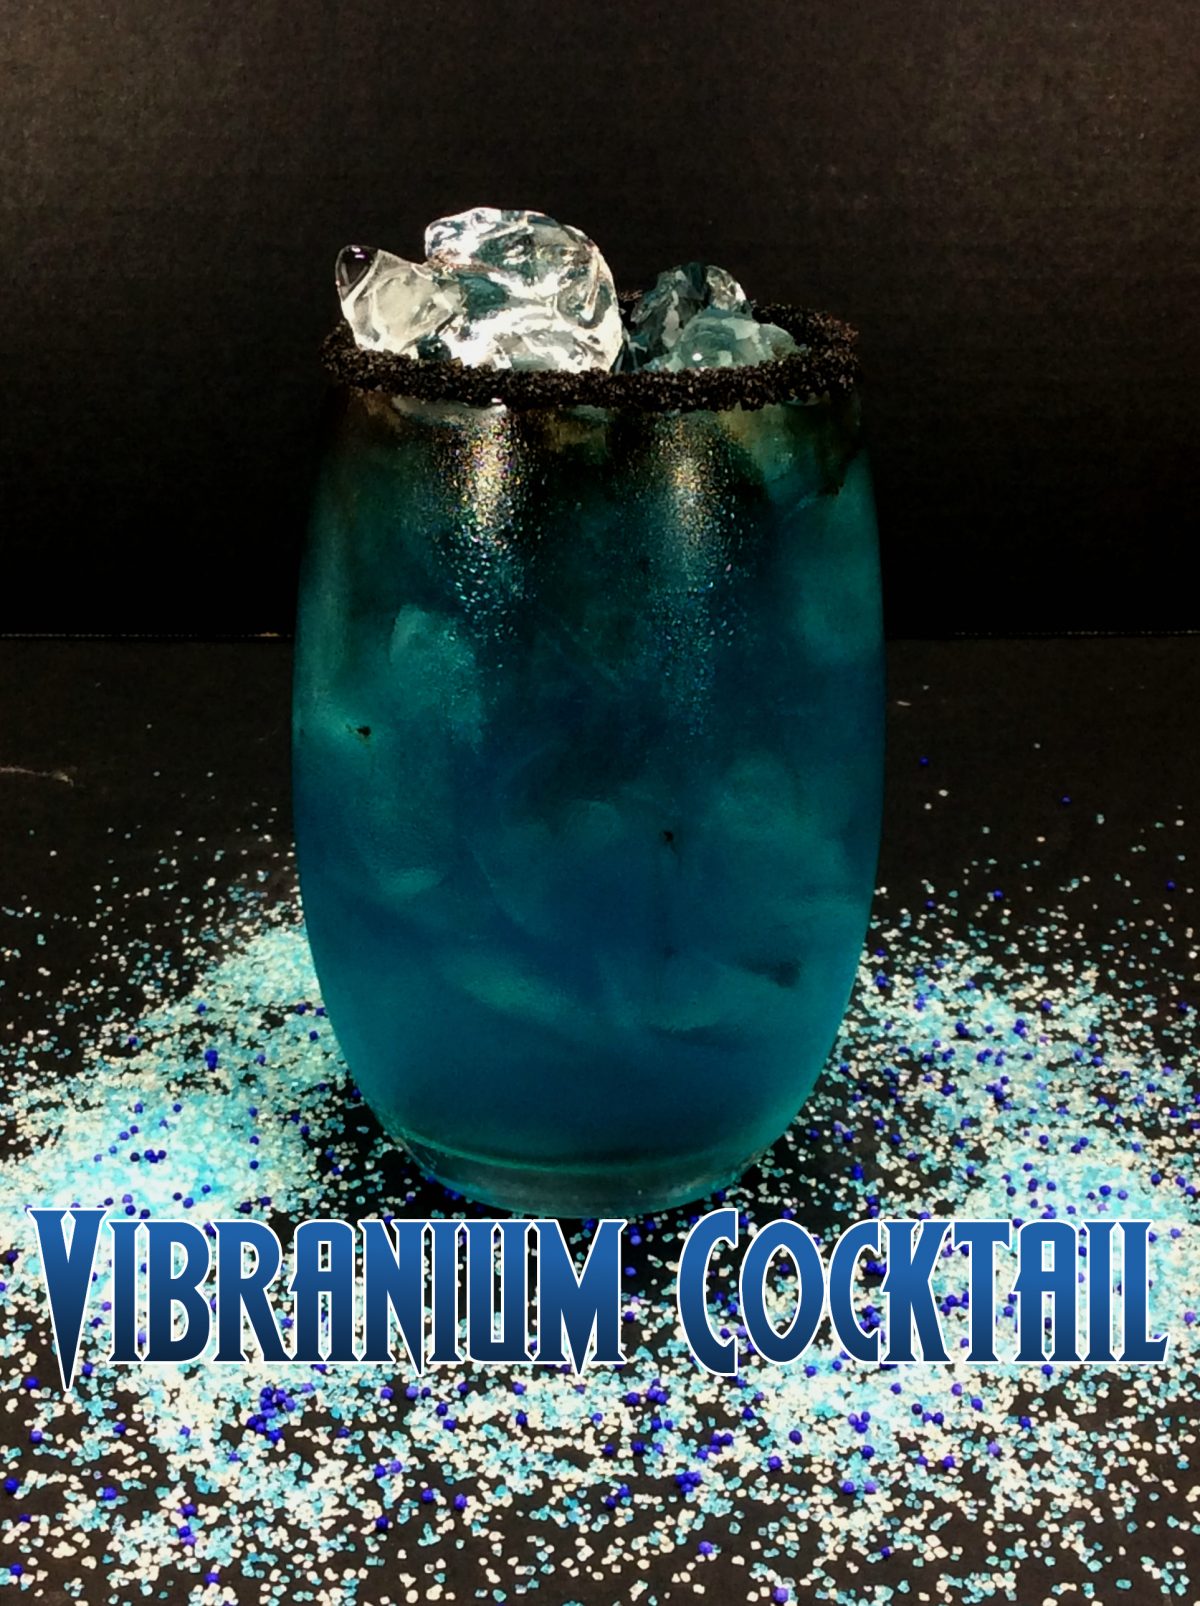 Black Panther Inspired Vibranium Cocktail Recipe